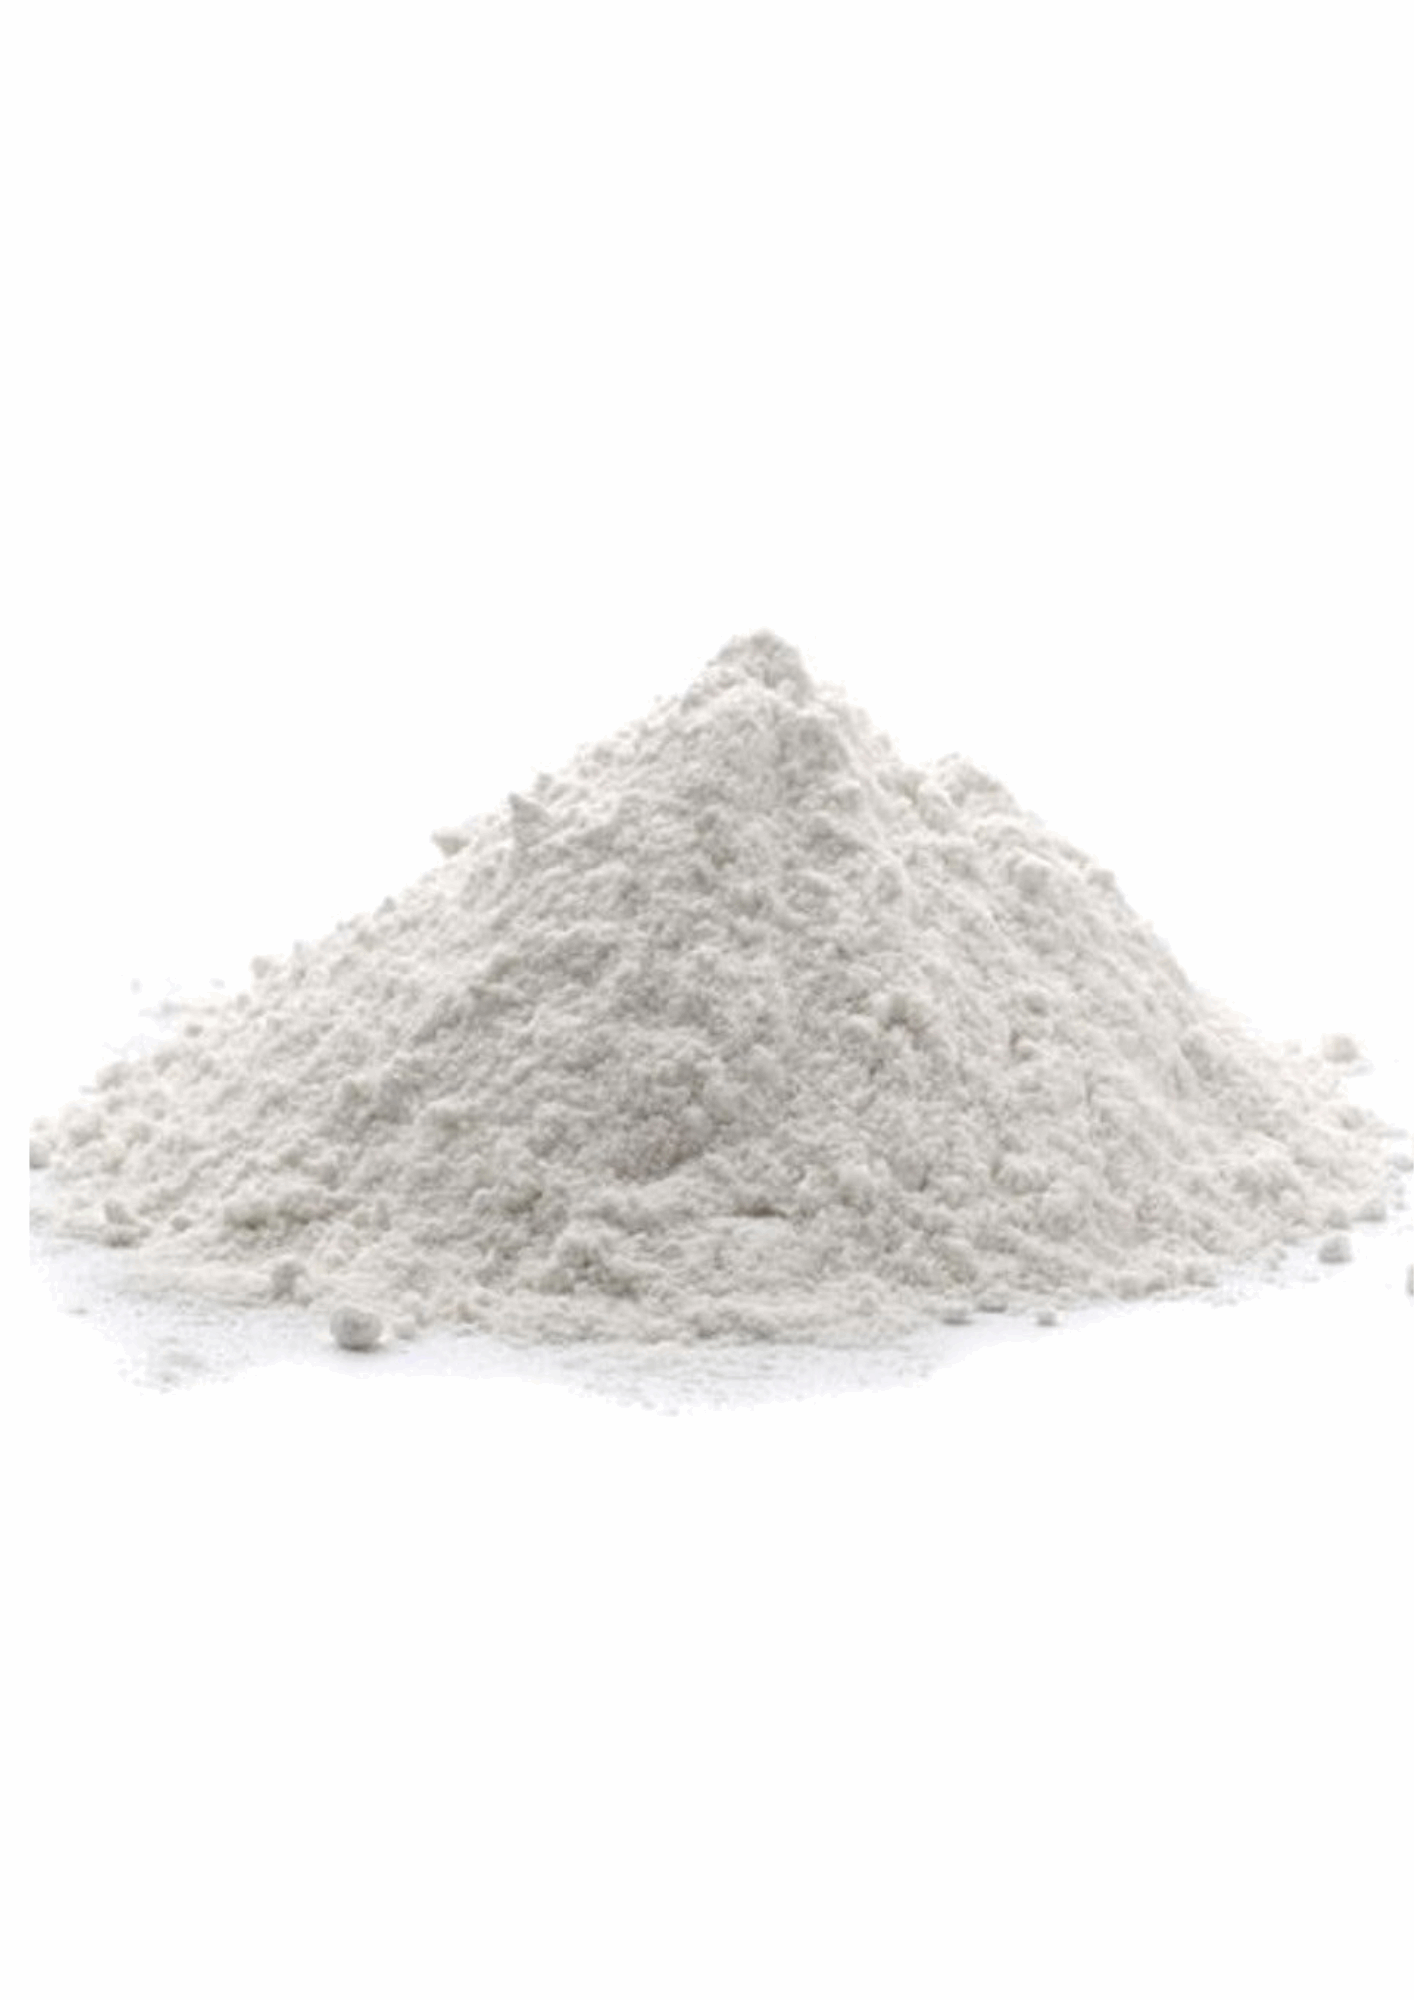 Patco Pharma Magnesium Stearate Powder, Patco Pharma, API Powders, patco-pharma-magnesium-stearate-powder, Magnesium Stearate, Patco Pharma